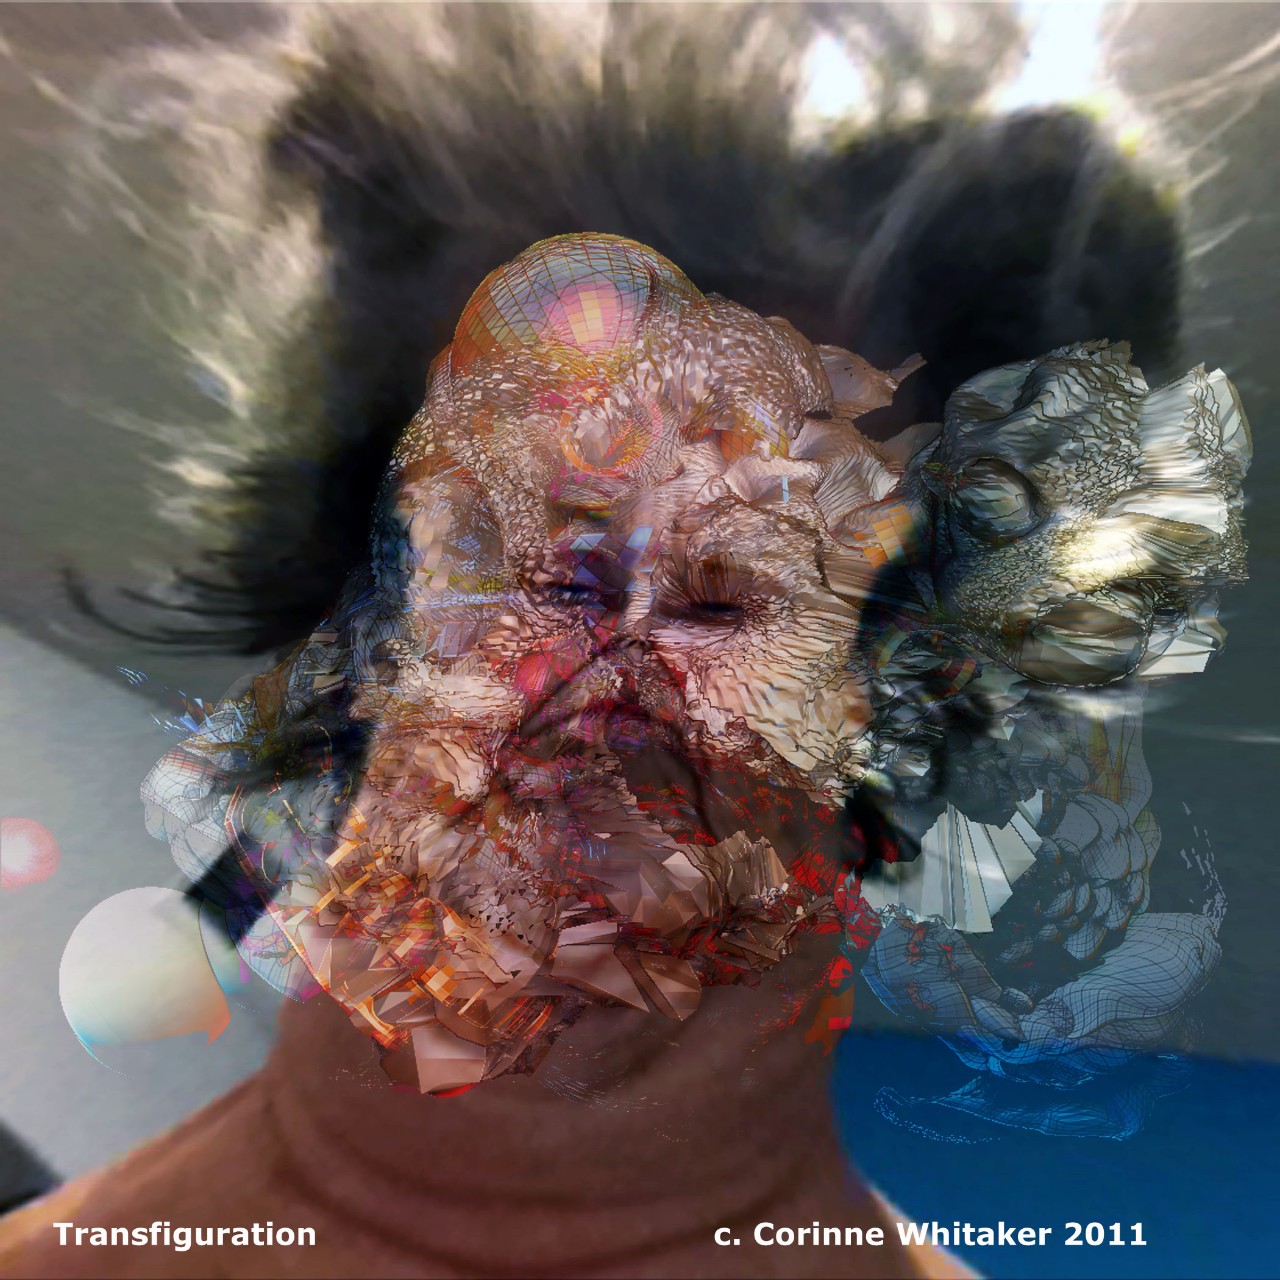 Transfiguration (No More War series), Corinne Whitaker, Digital painting, 2011